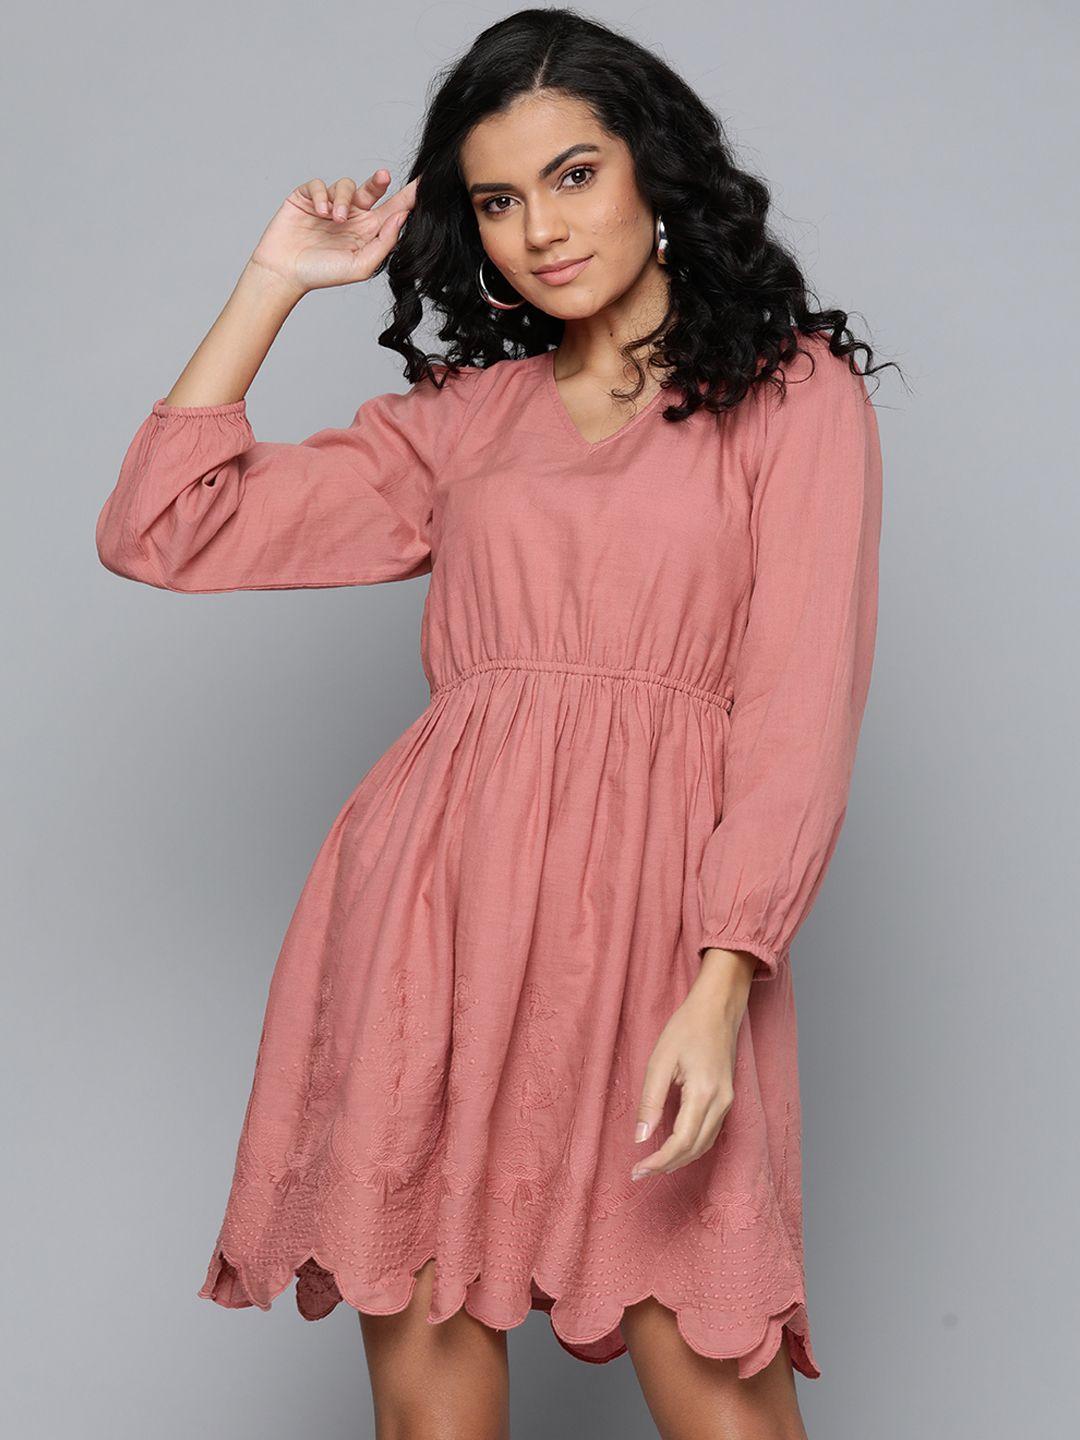 sassafras blush pink ethnic motifs embroidered pure cotton fit & flare dress